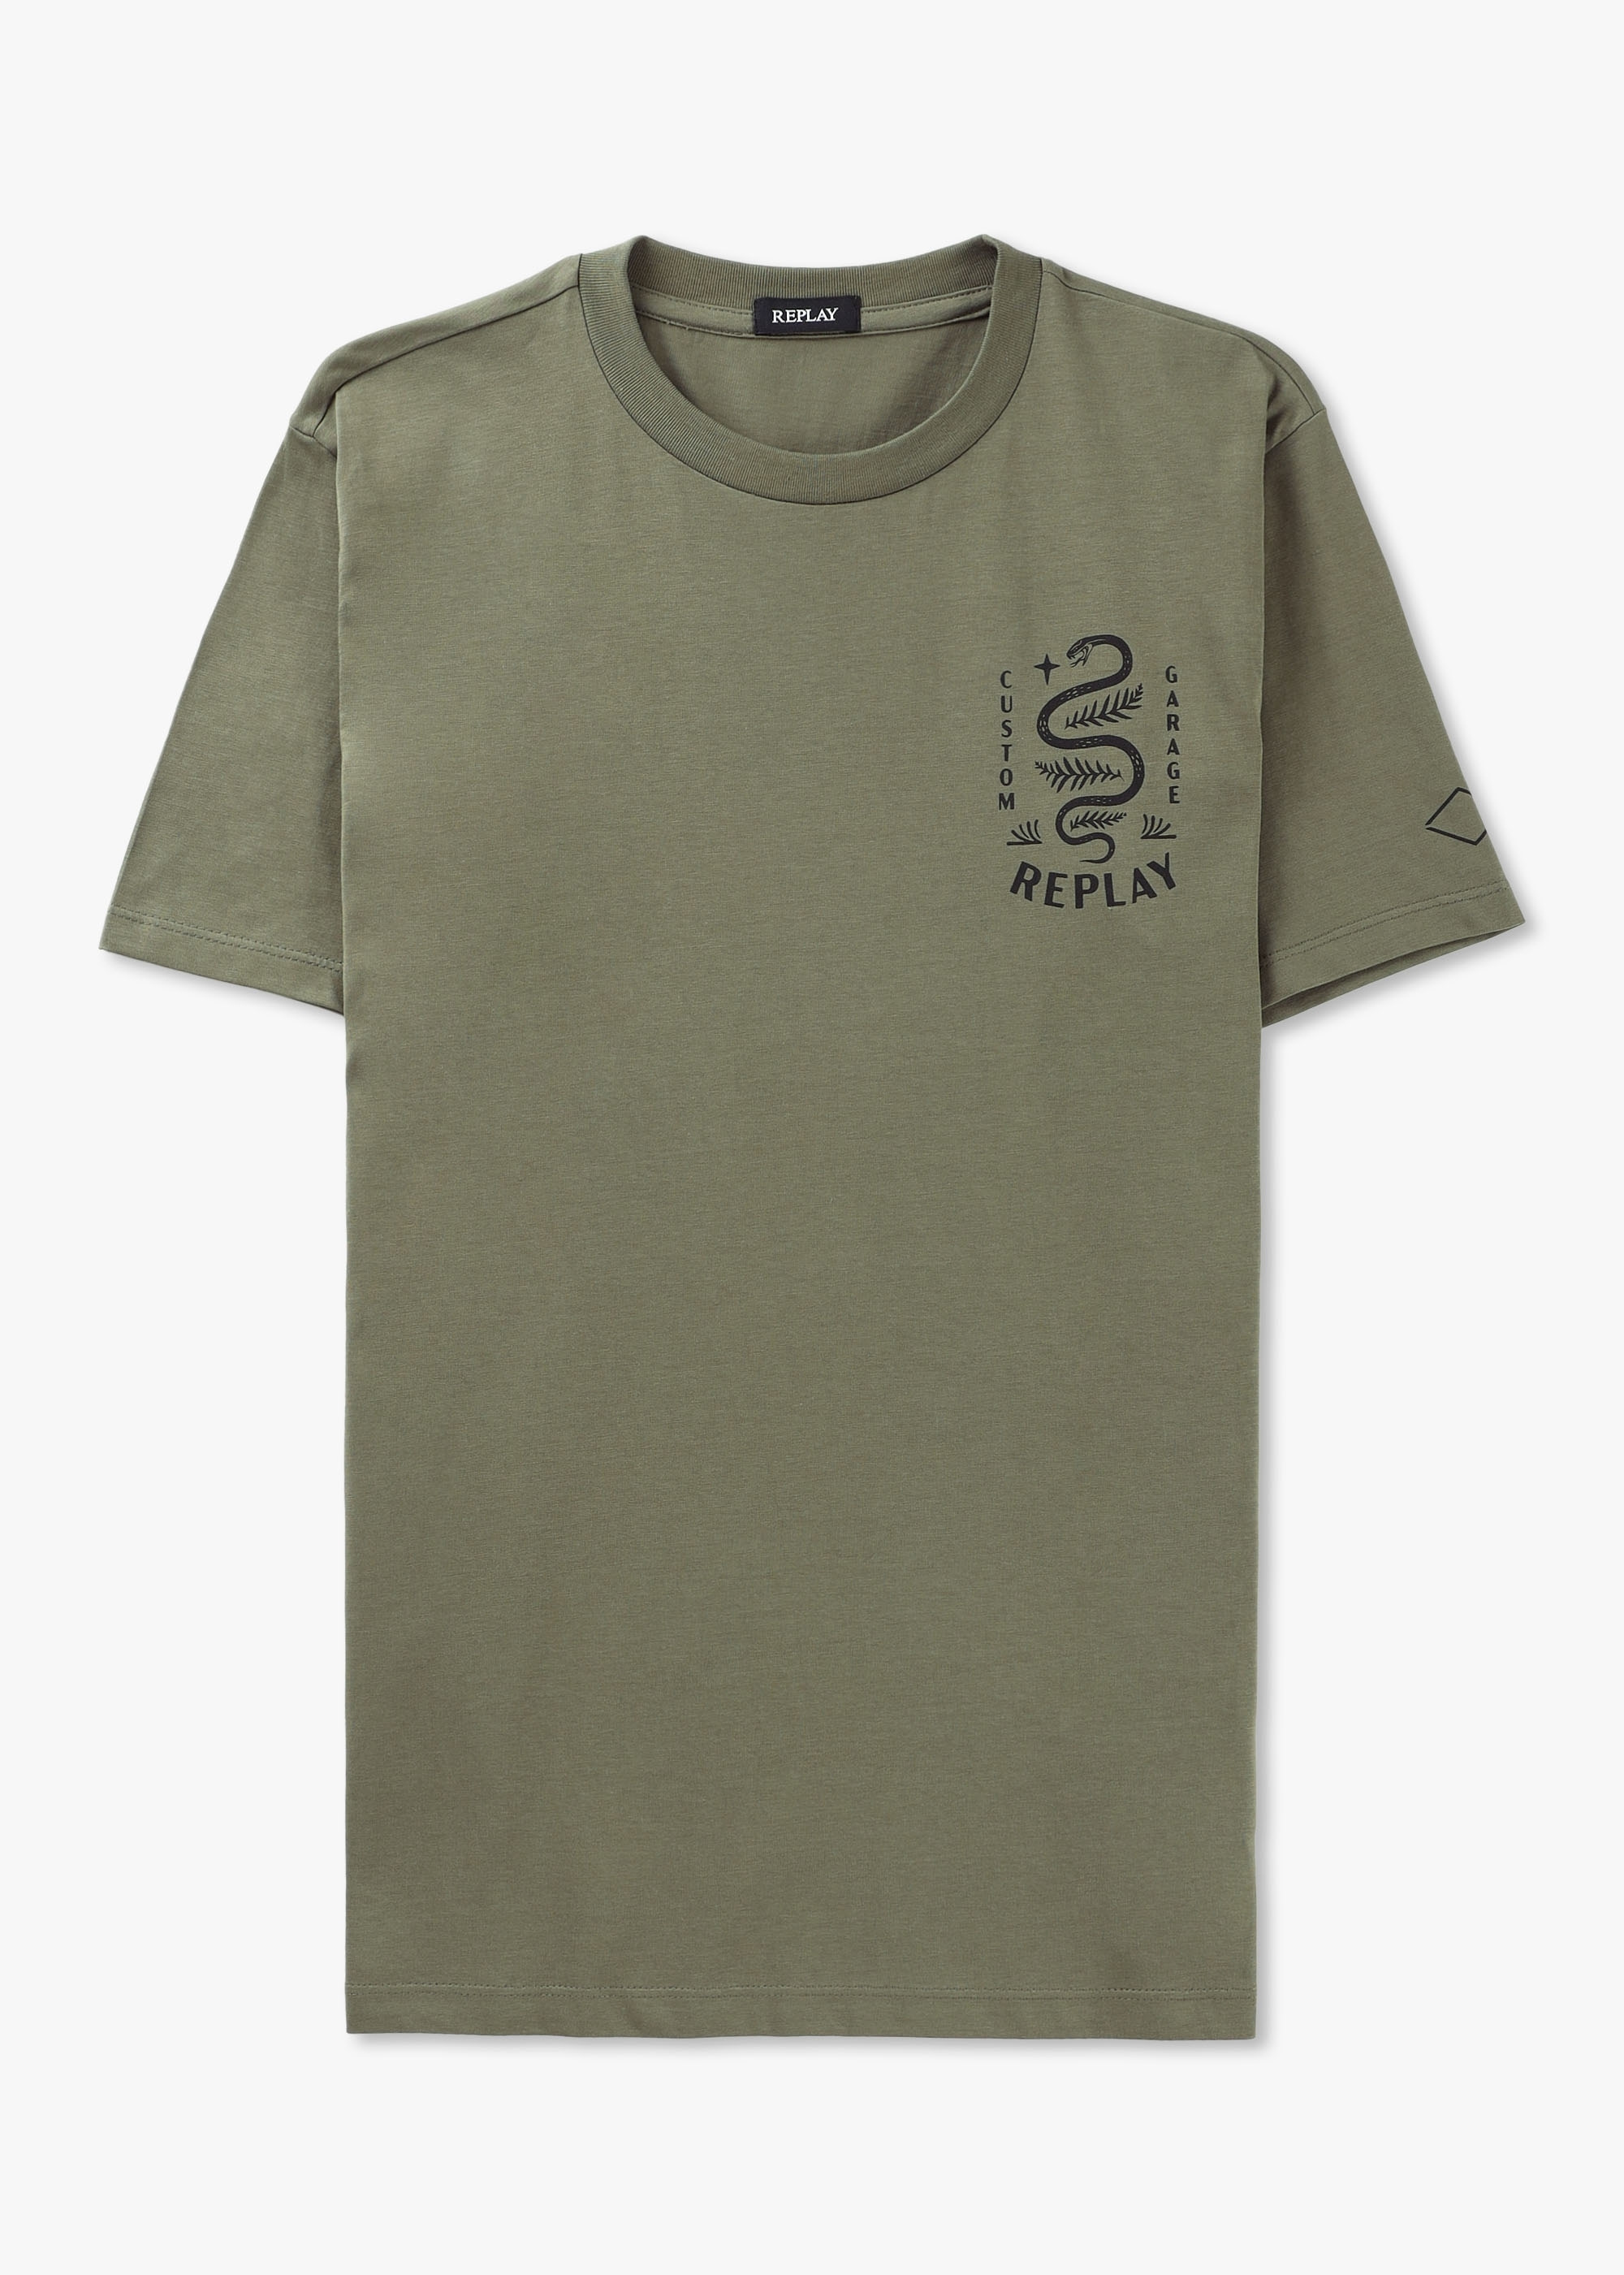 Replay Mens Boost Garage Snake Print T-shirt In Light Military